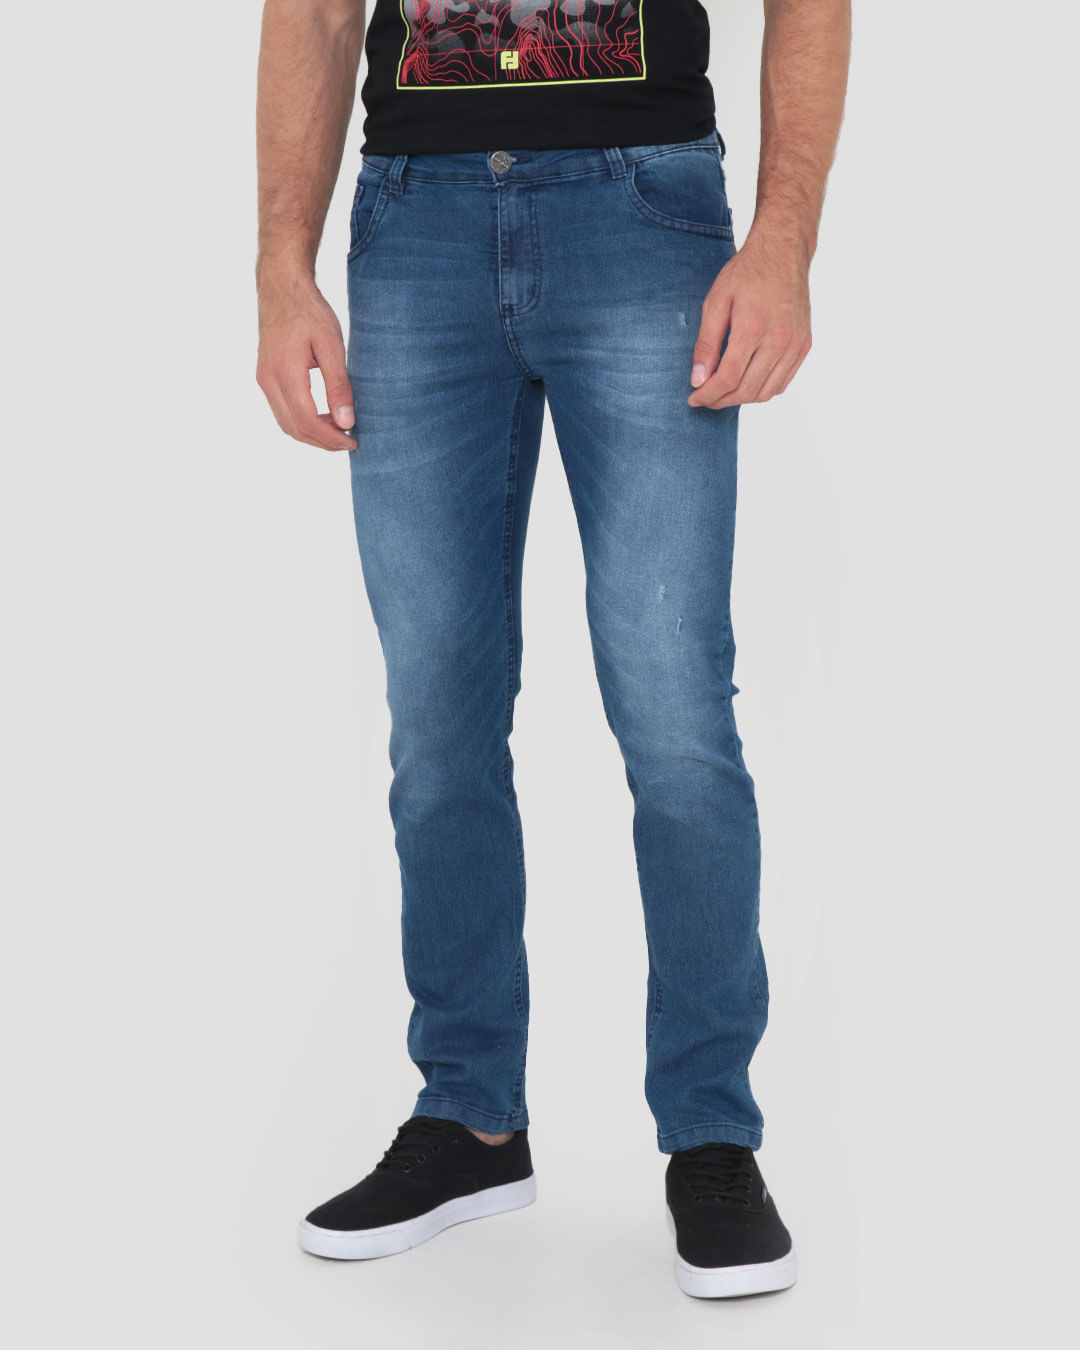 23121000990045-blue-jeans-medio-1